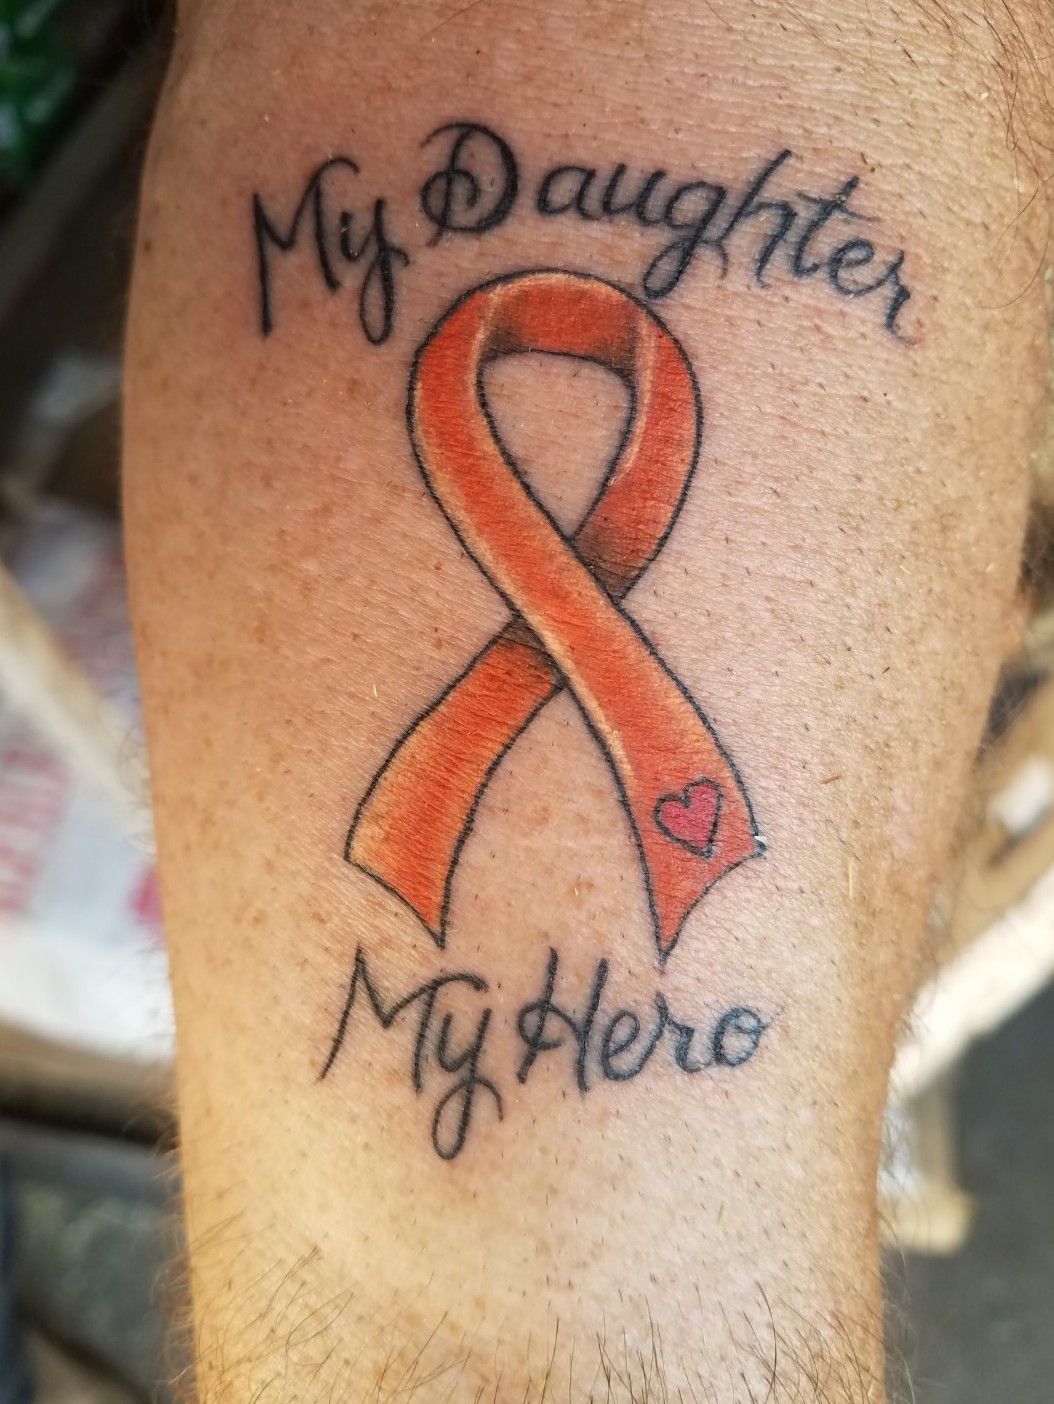 Leukemia tattoo